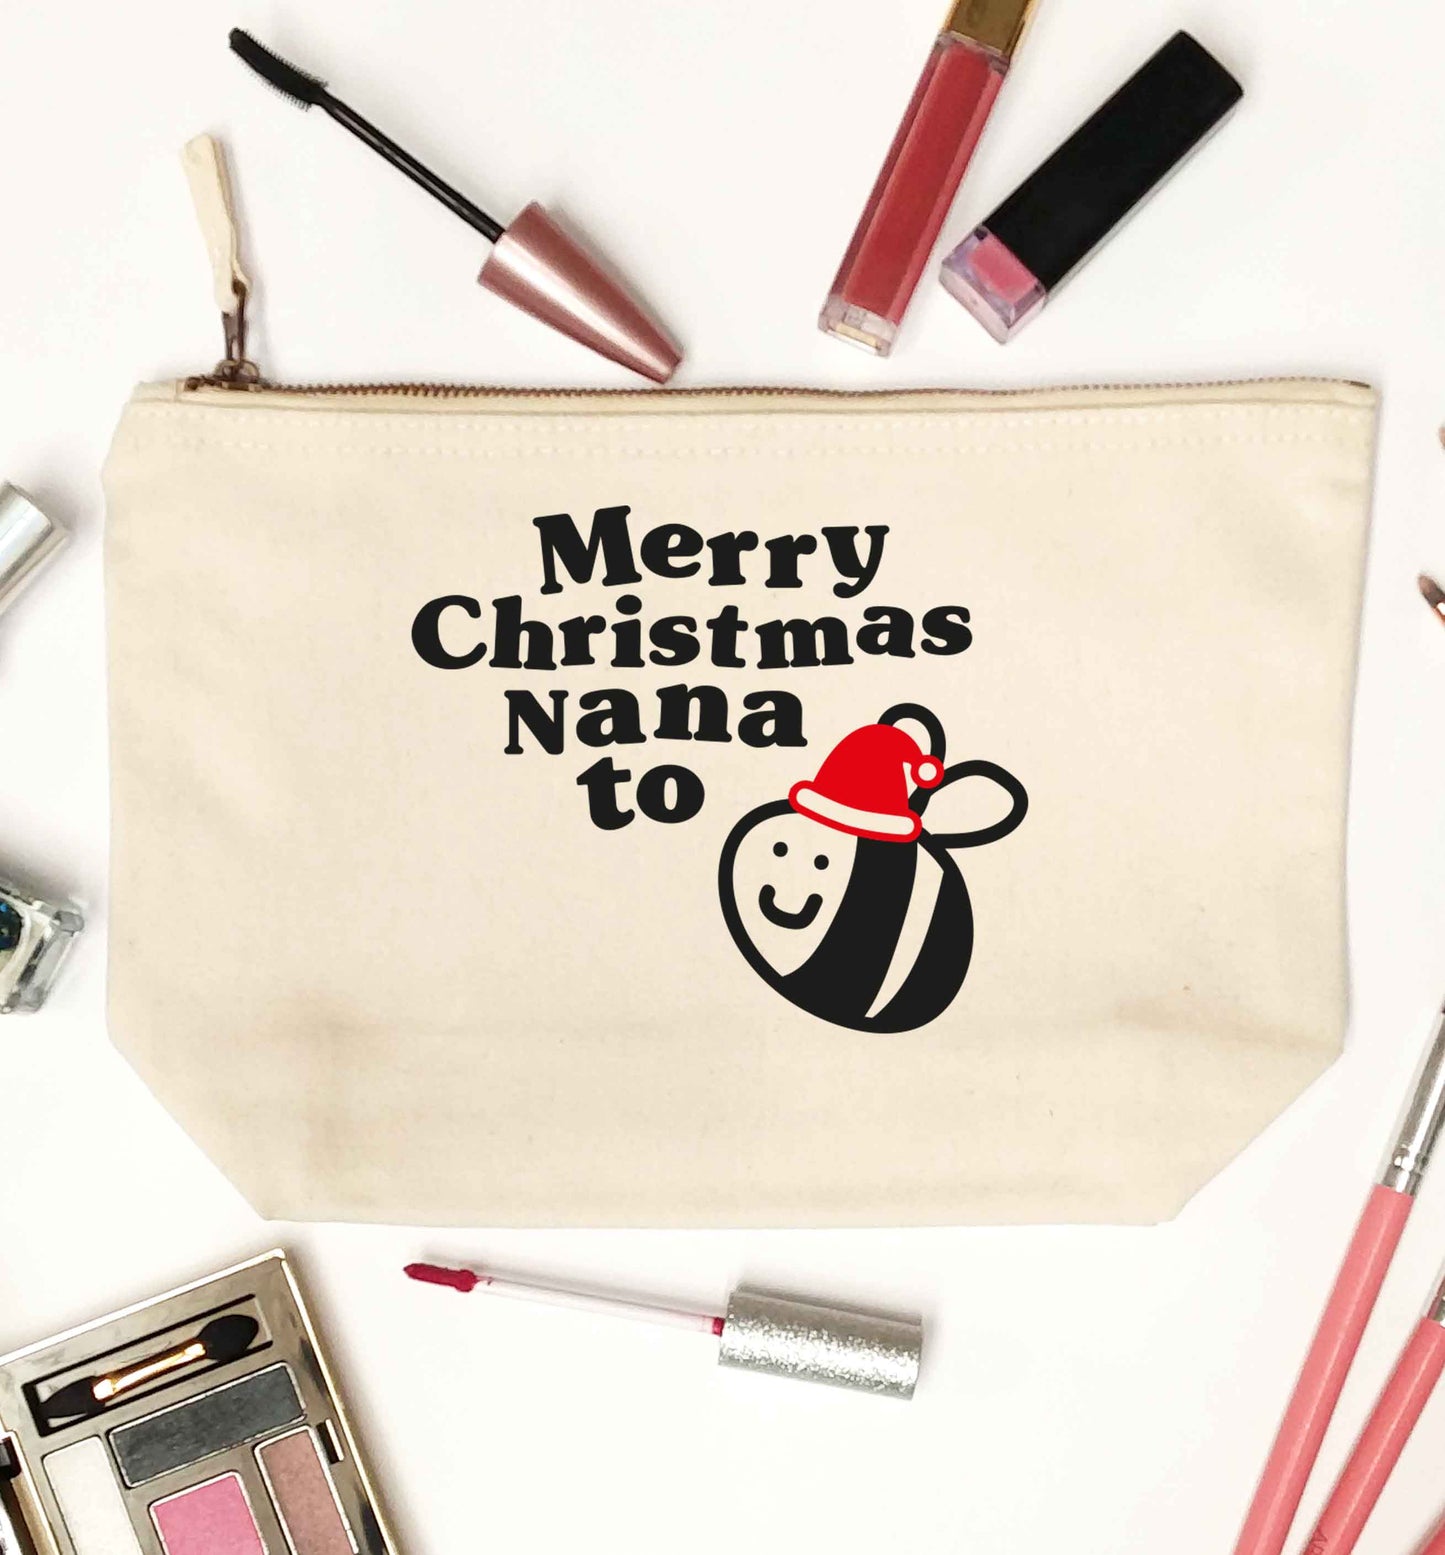 Merry Christmas nana to be natural makeup bag